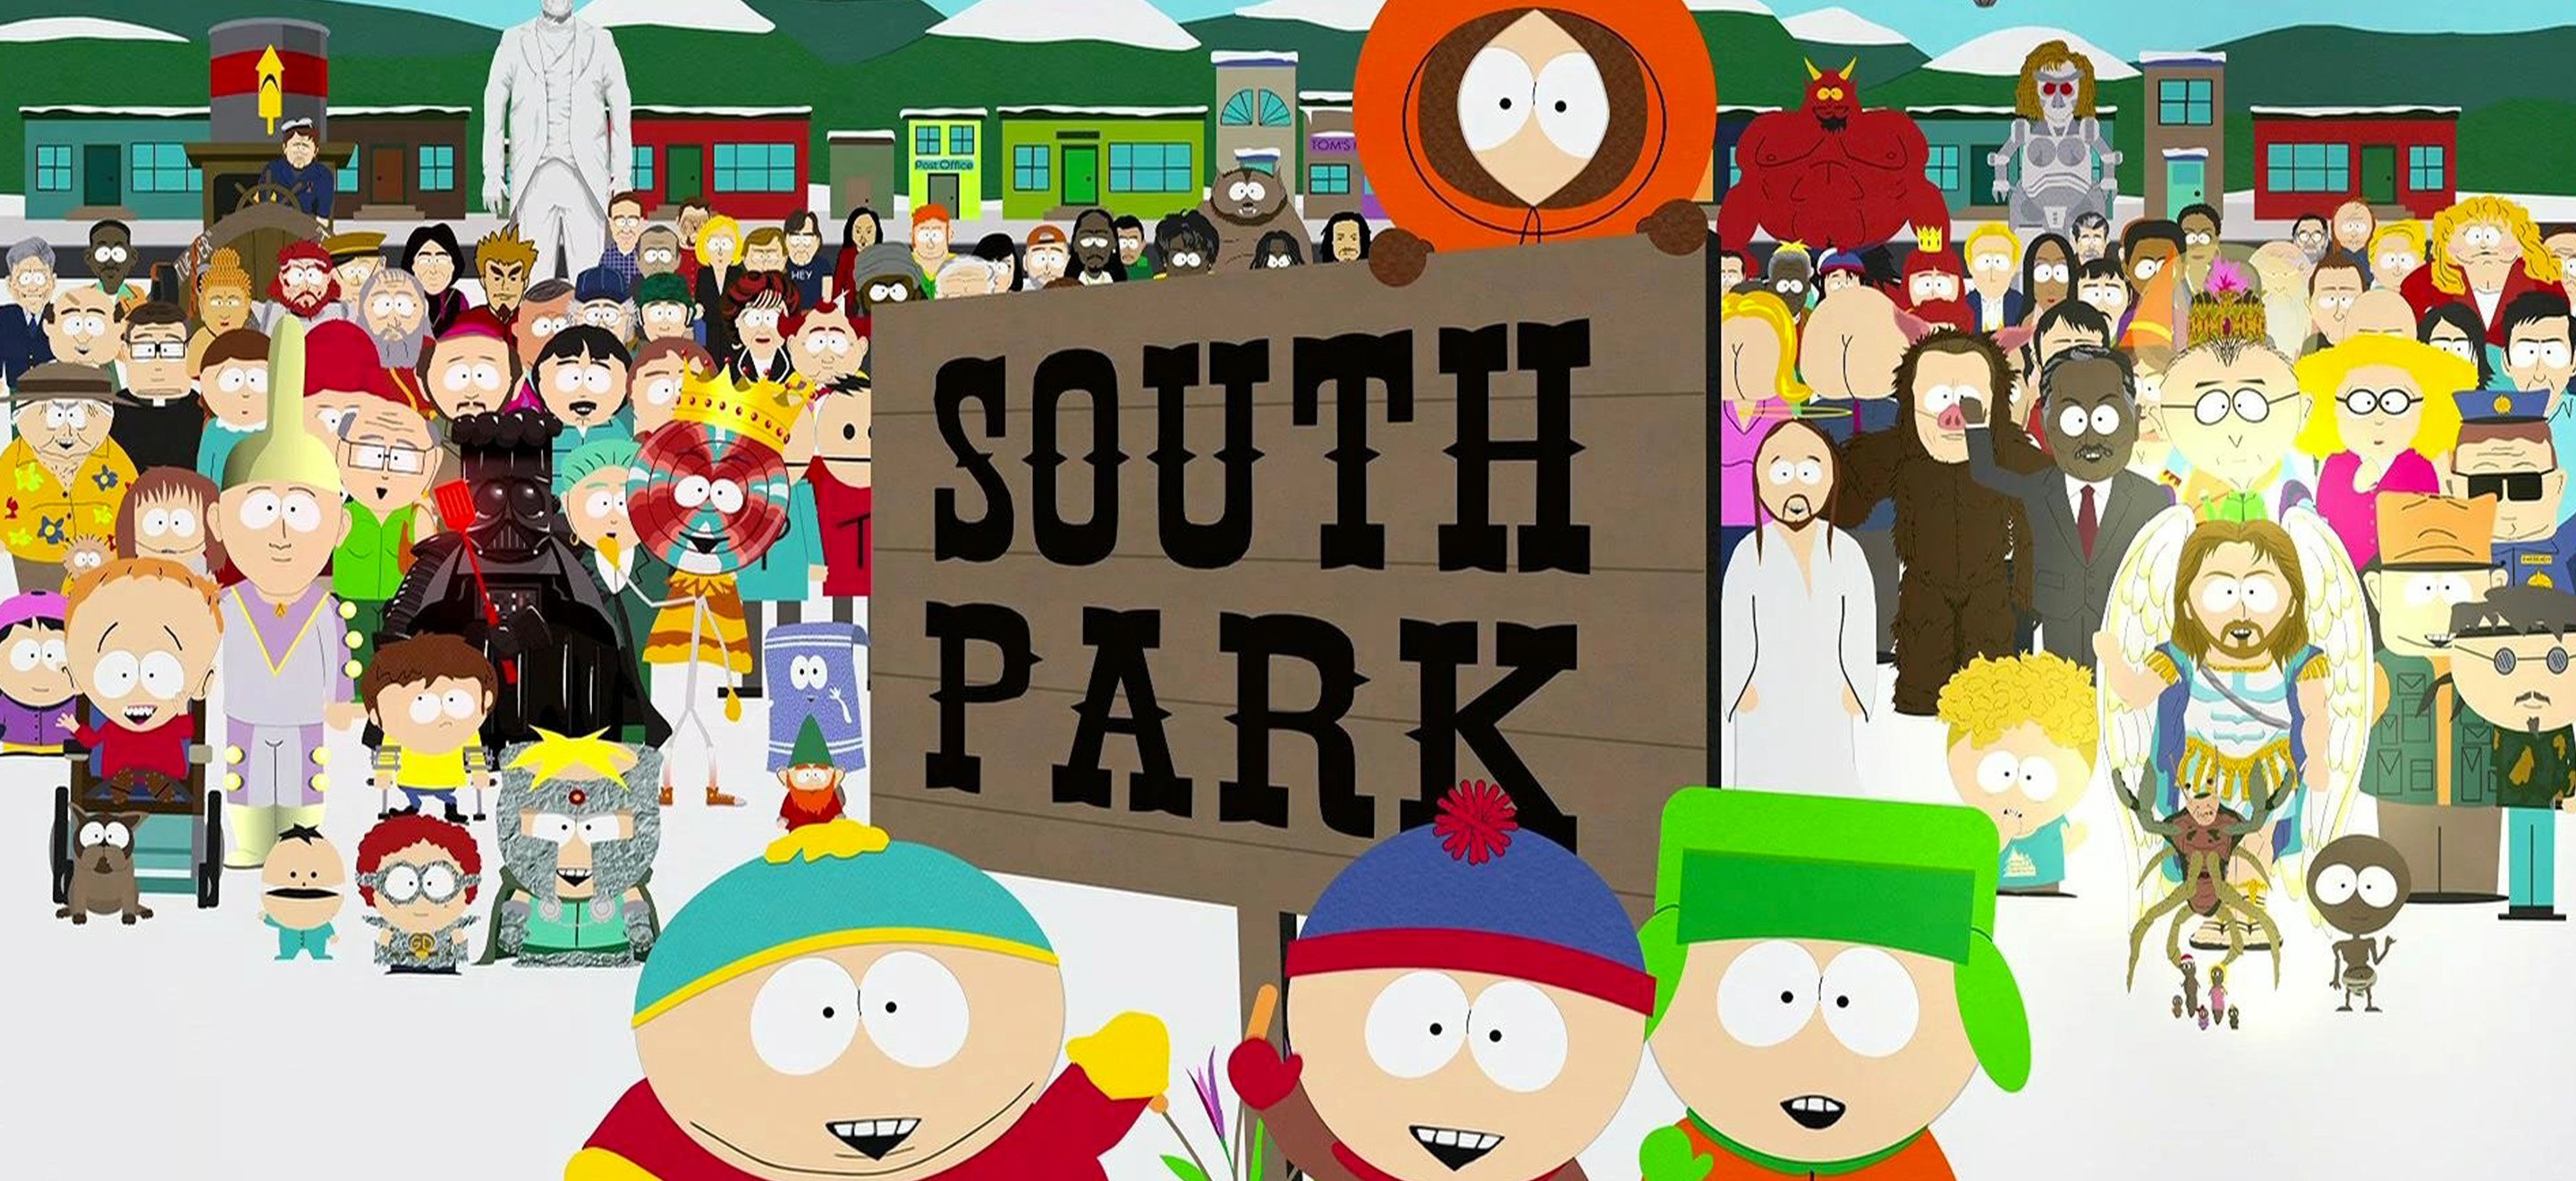 Les origines de South Park